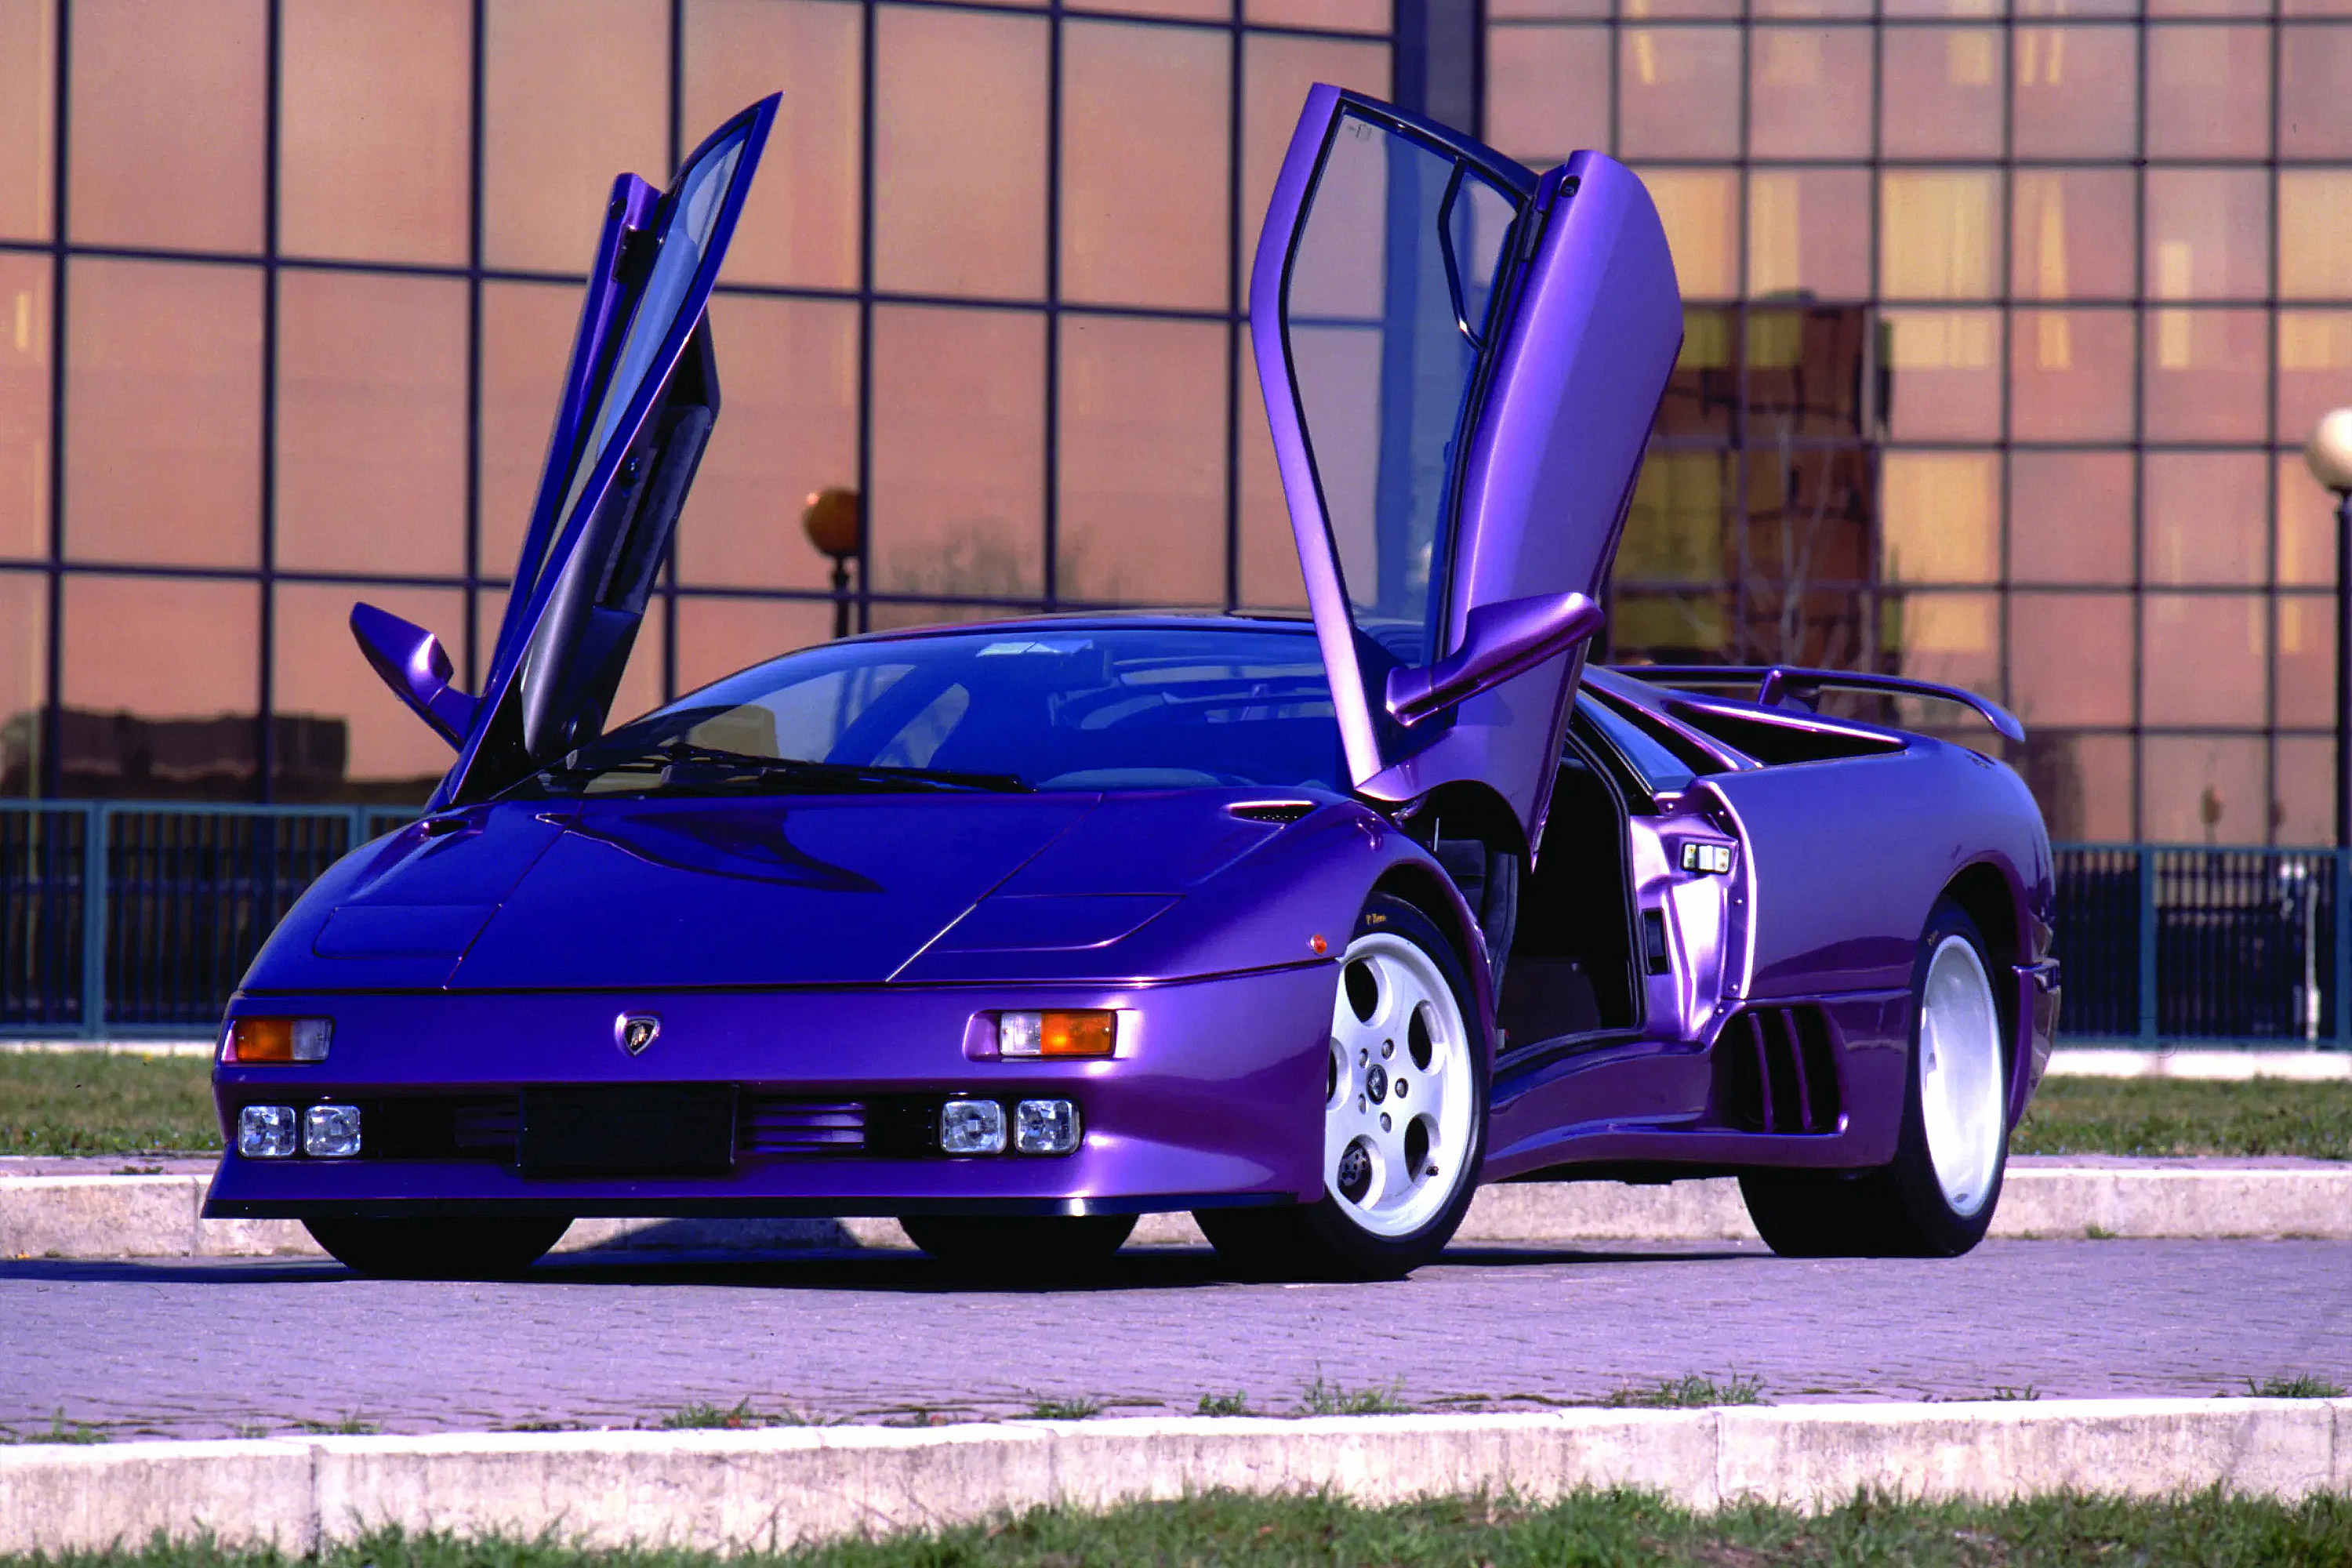  1994 Lamborghini Diablo SE Wallpaper.